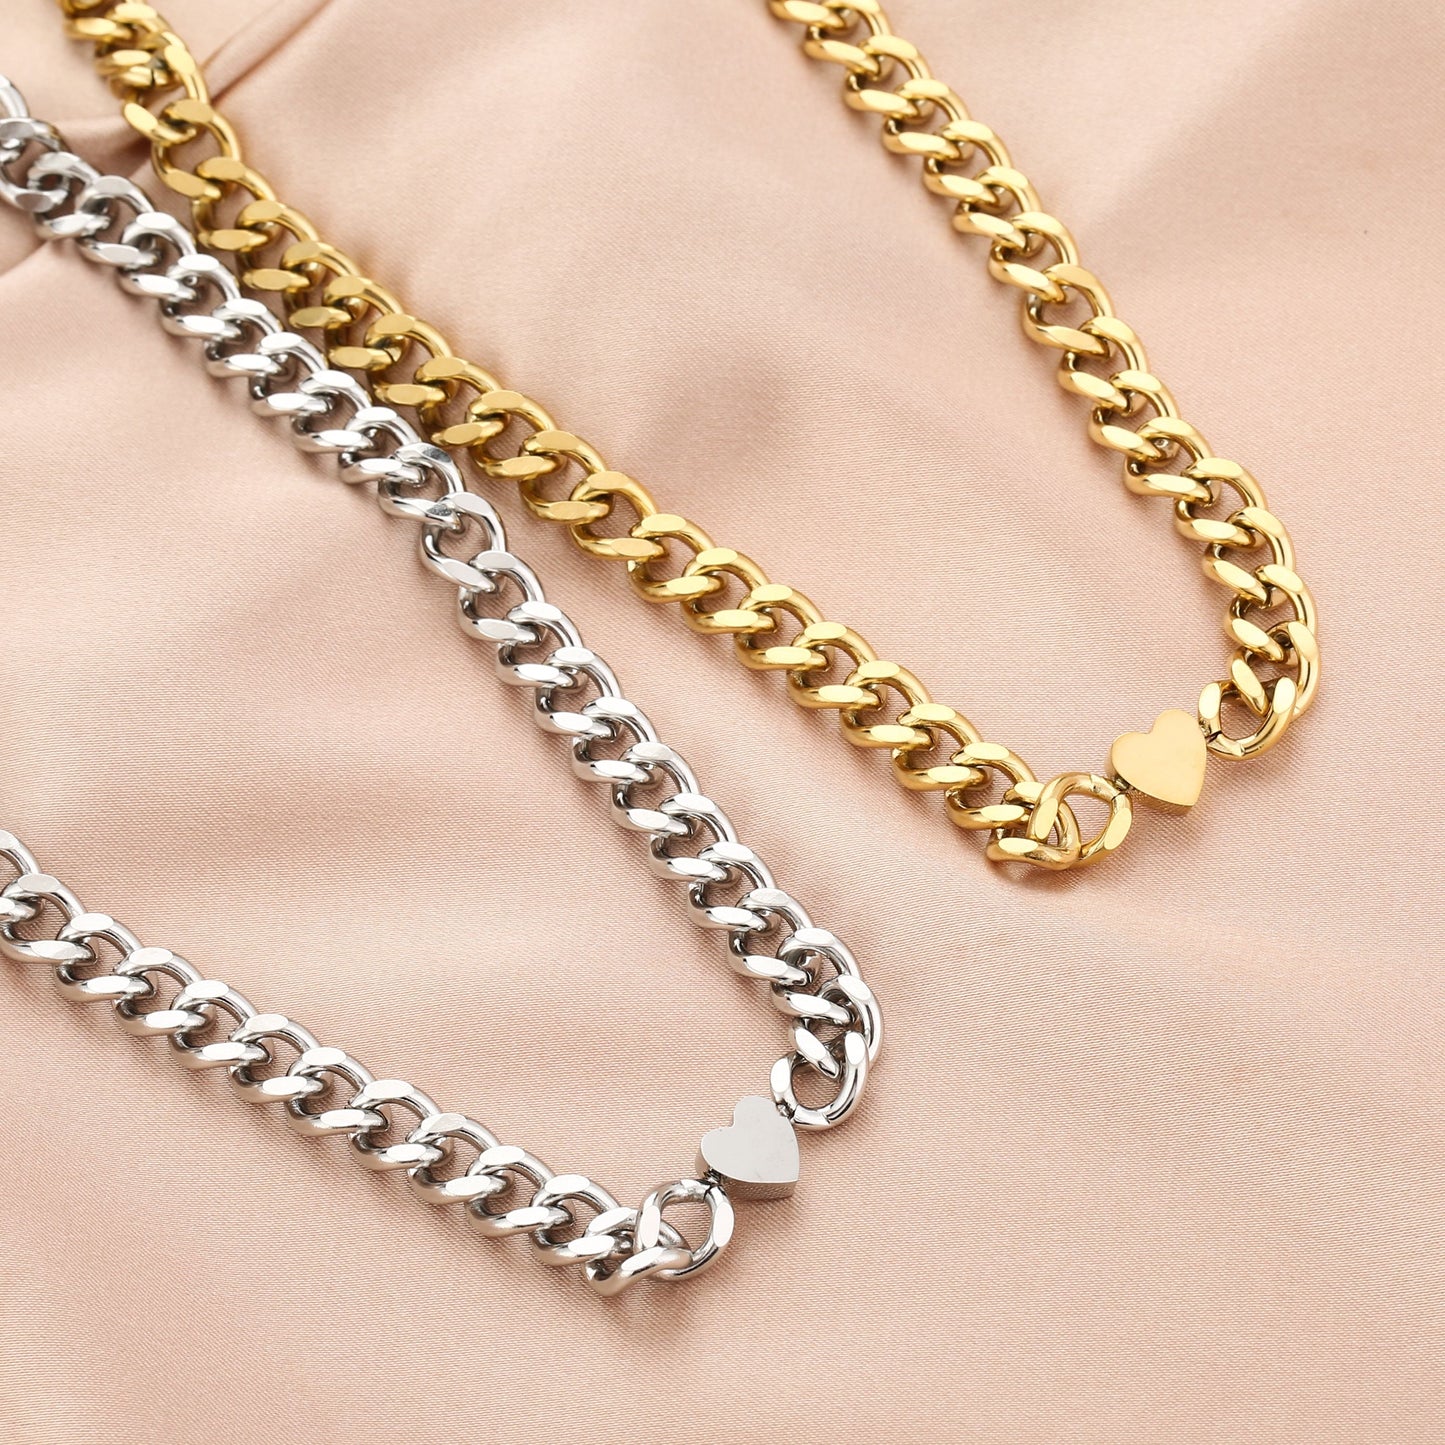 Love Chain Necklace Silver